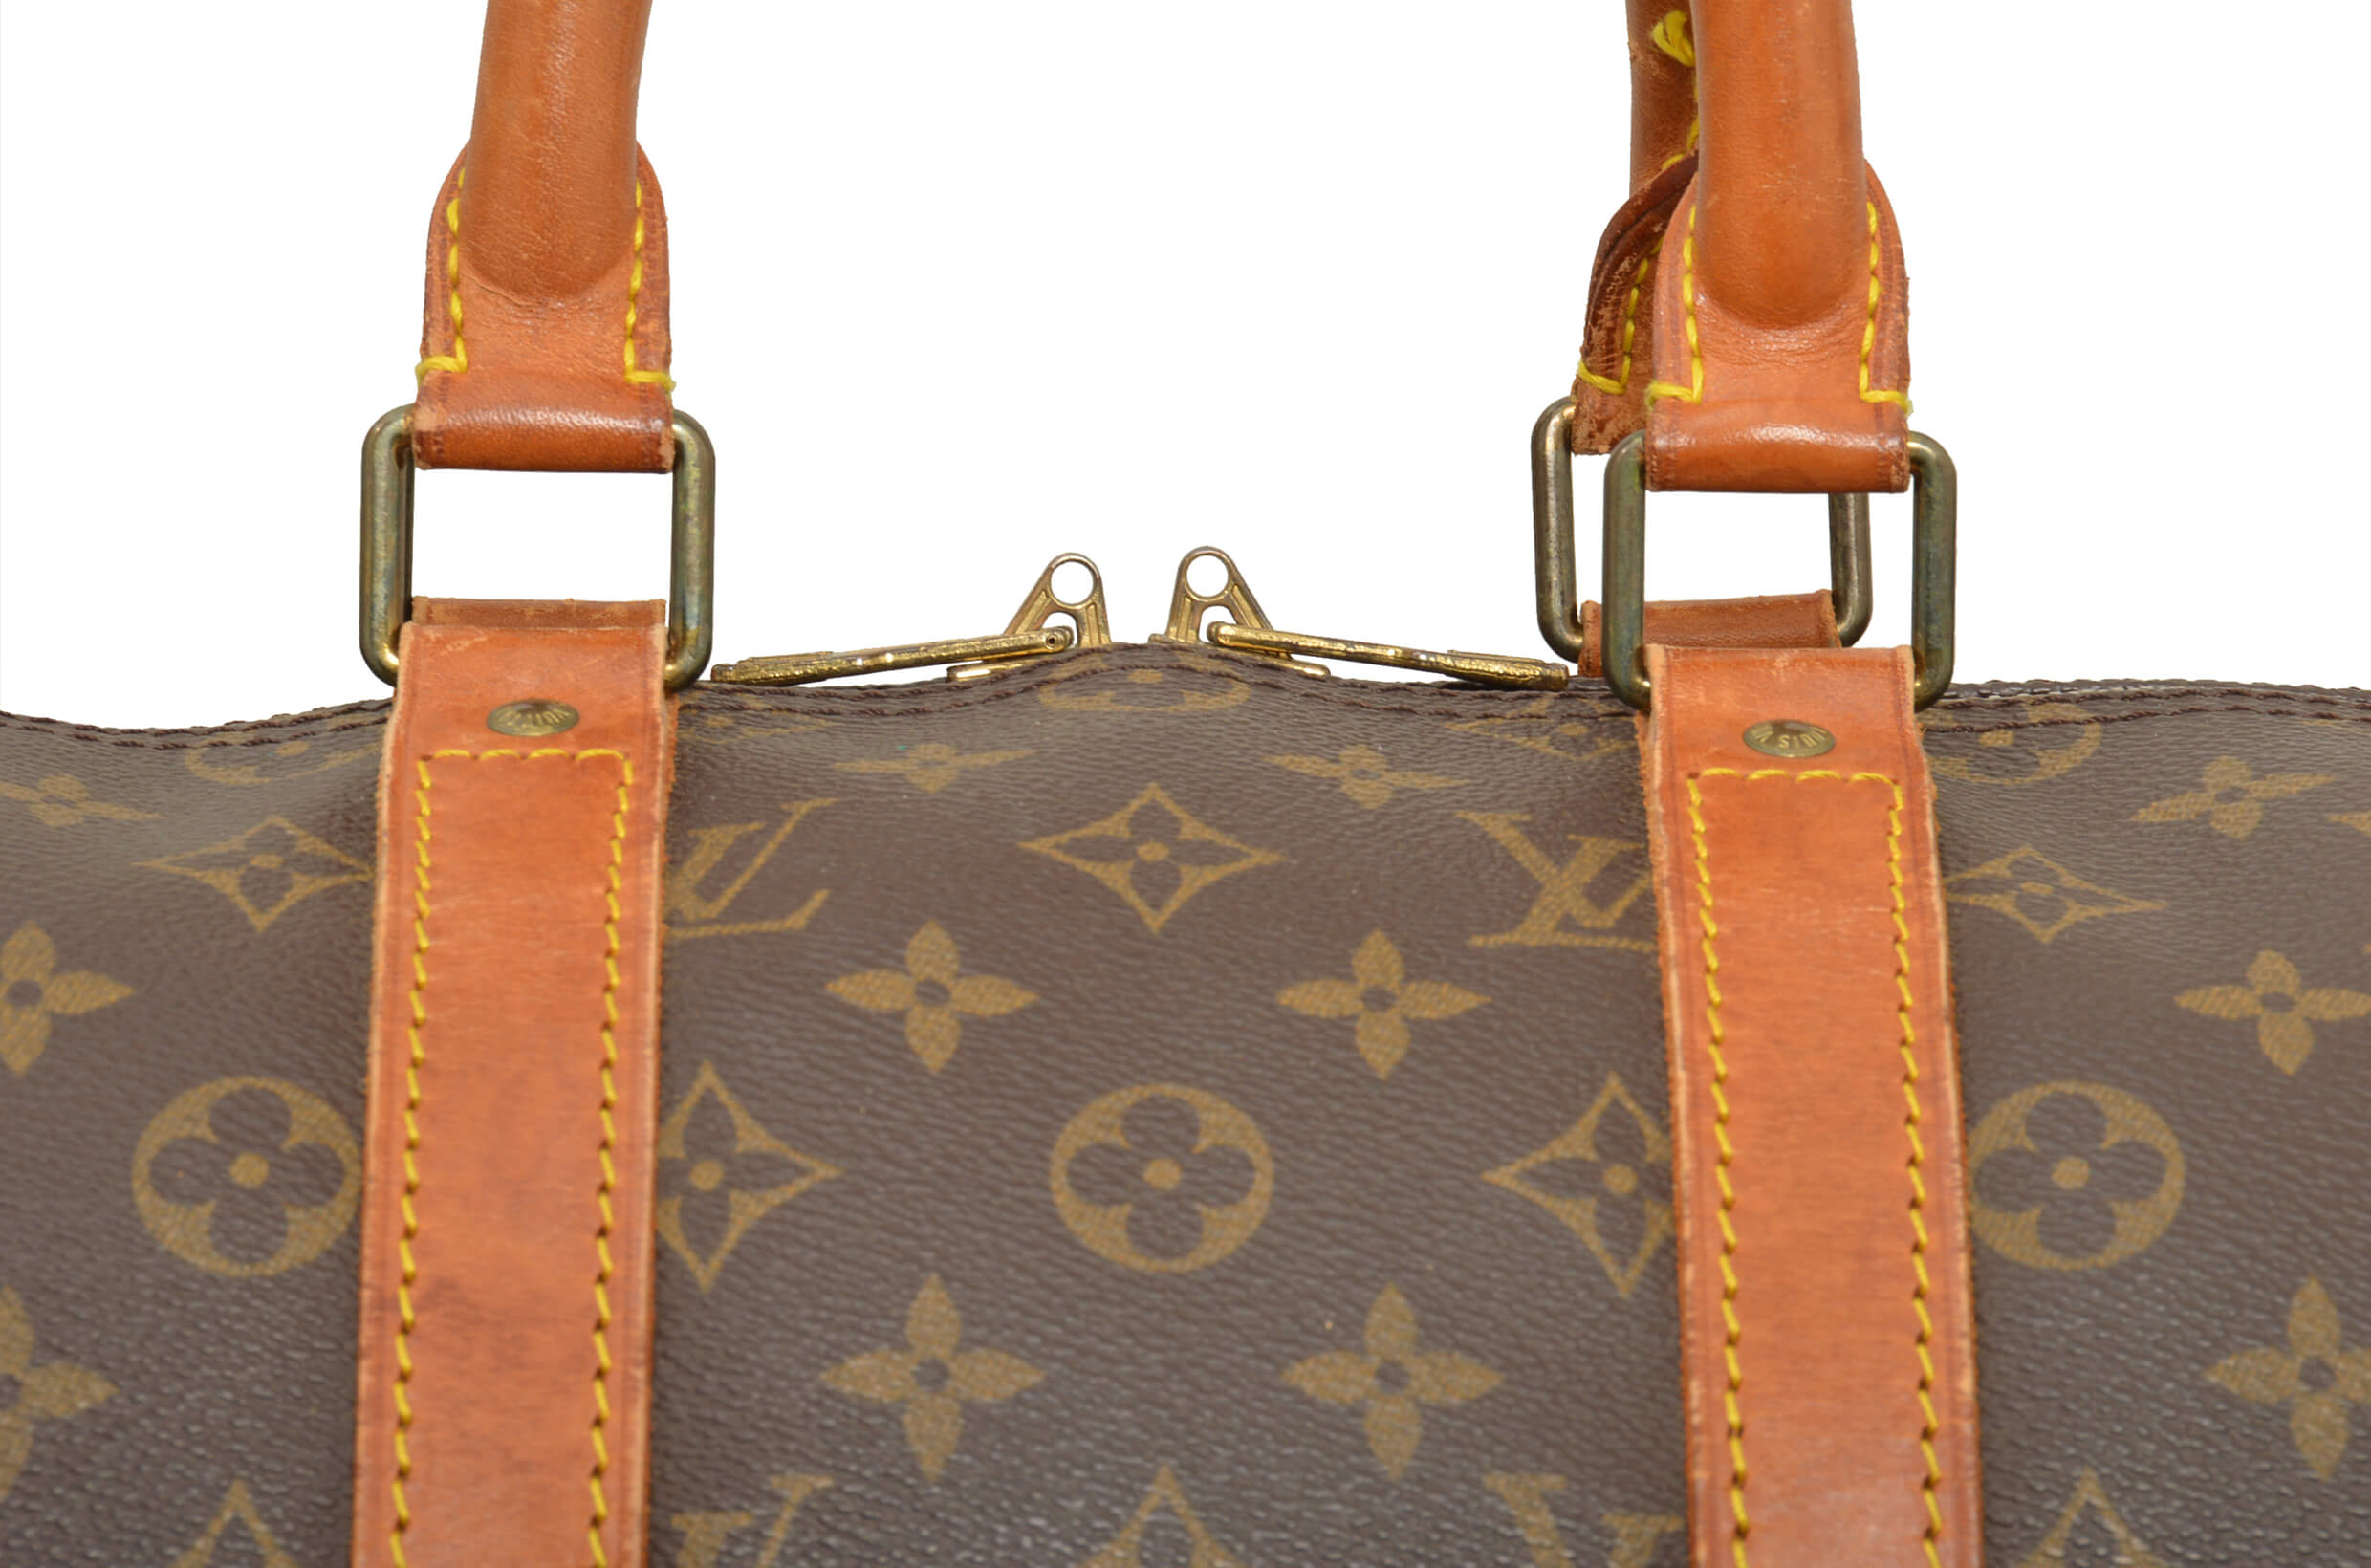 Fits LV Louis Vuitton Keepall 55 - Bag Base Shaper 1/8 Clear Acrylic